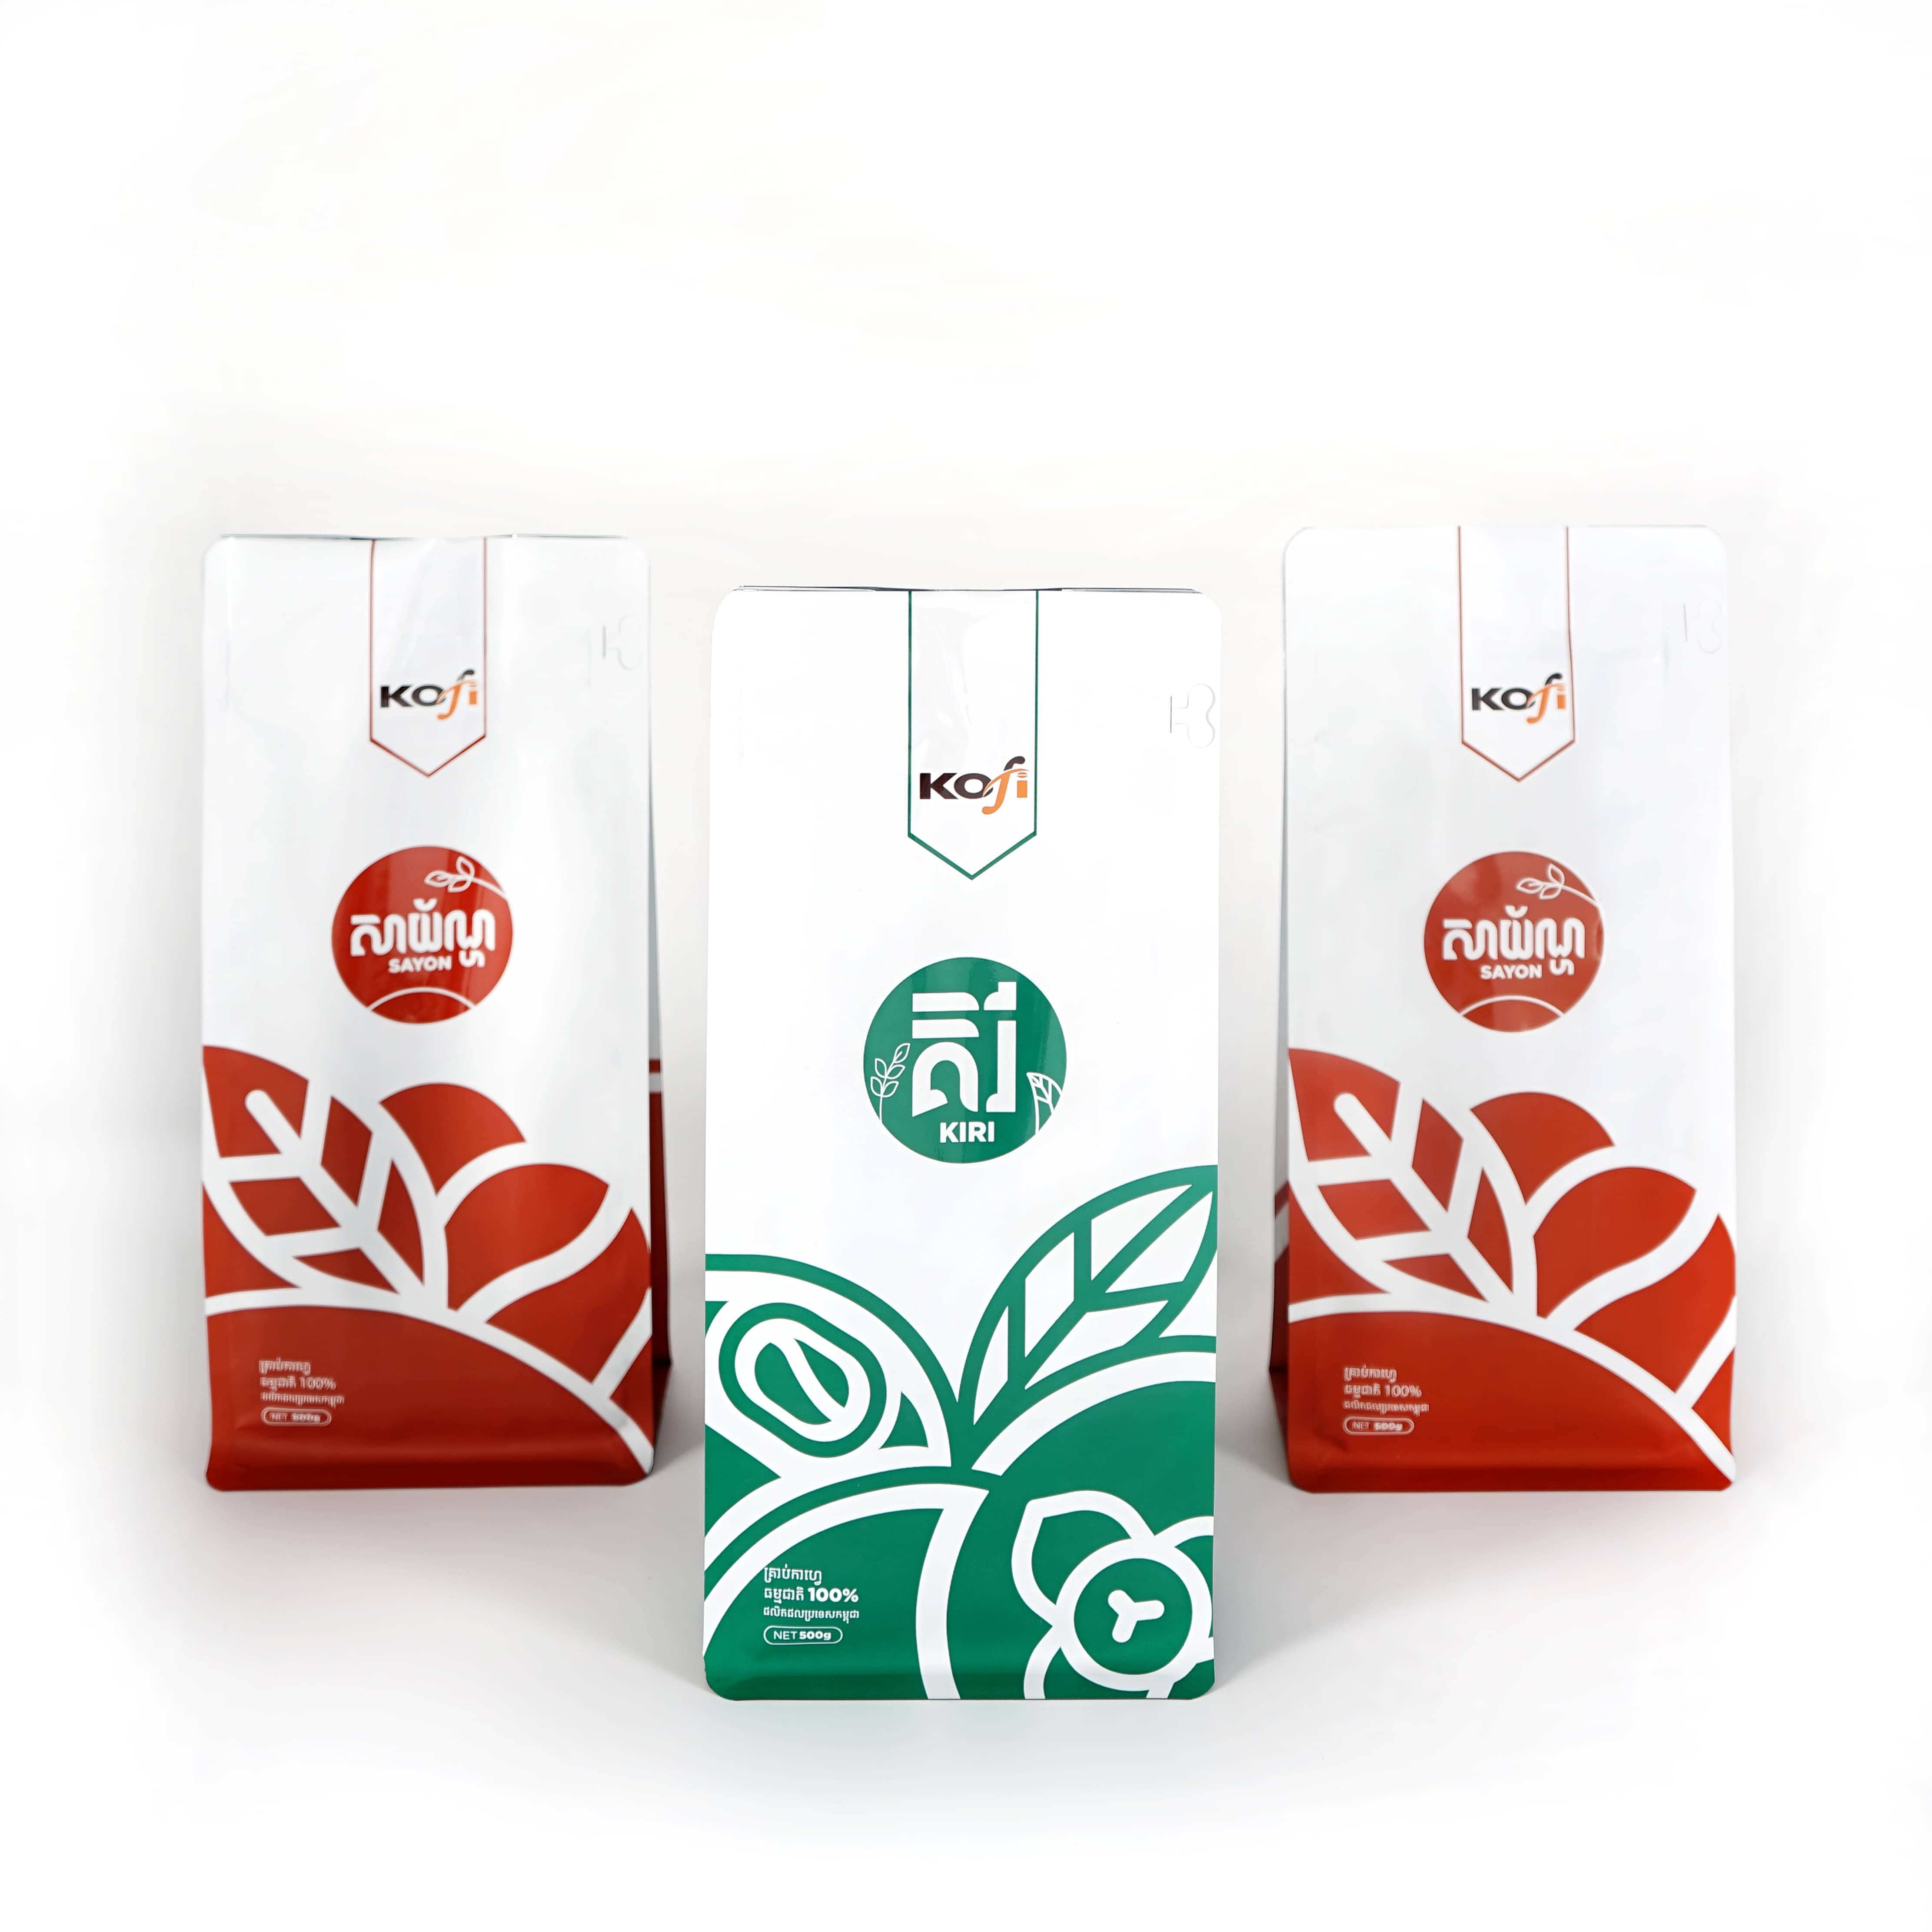 Aluminium Foil Sacs Emballage Tea Kofi Polasetiki Packaging Bags Manufacturing